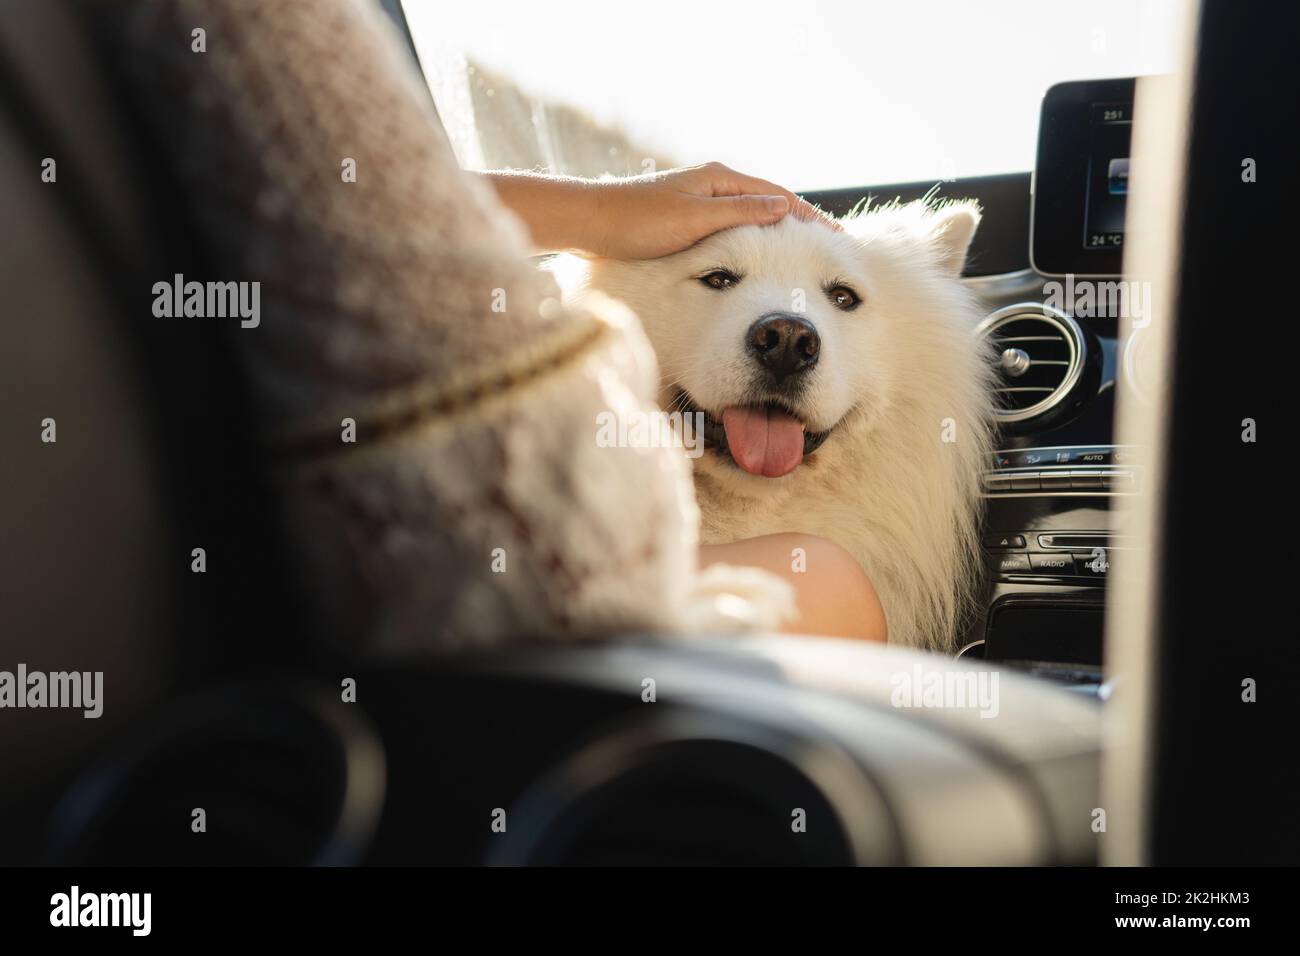 Cute Samoyed dog inside a modern car during a road trip Stock Photo